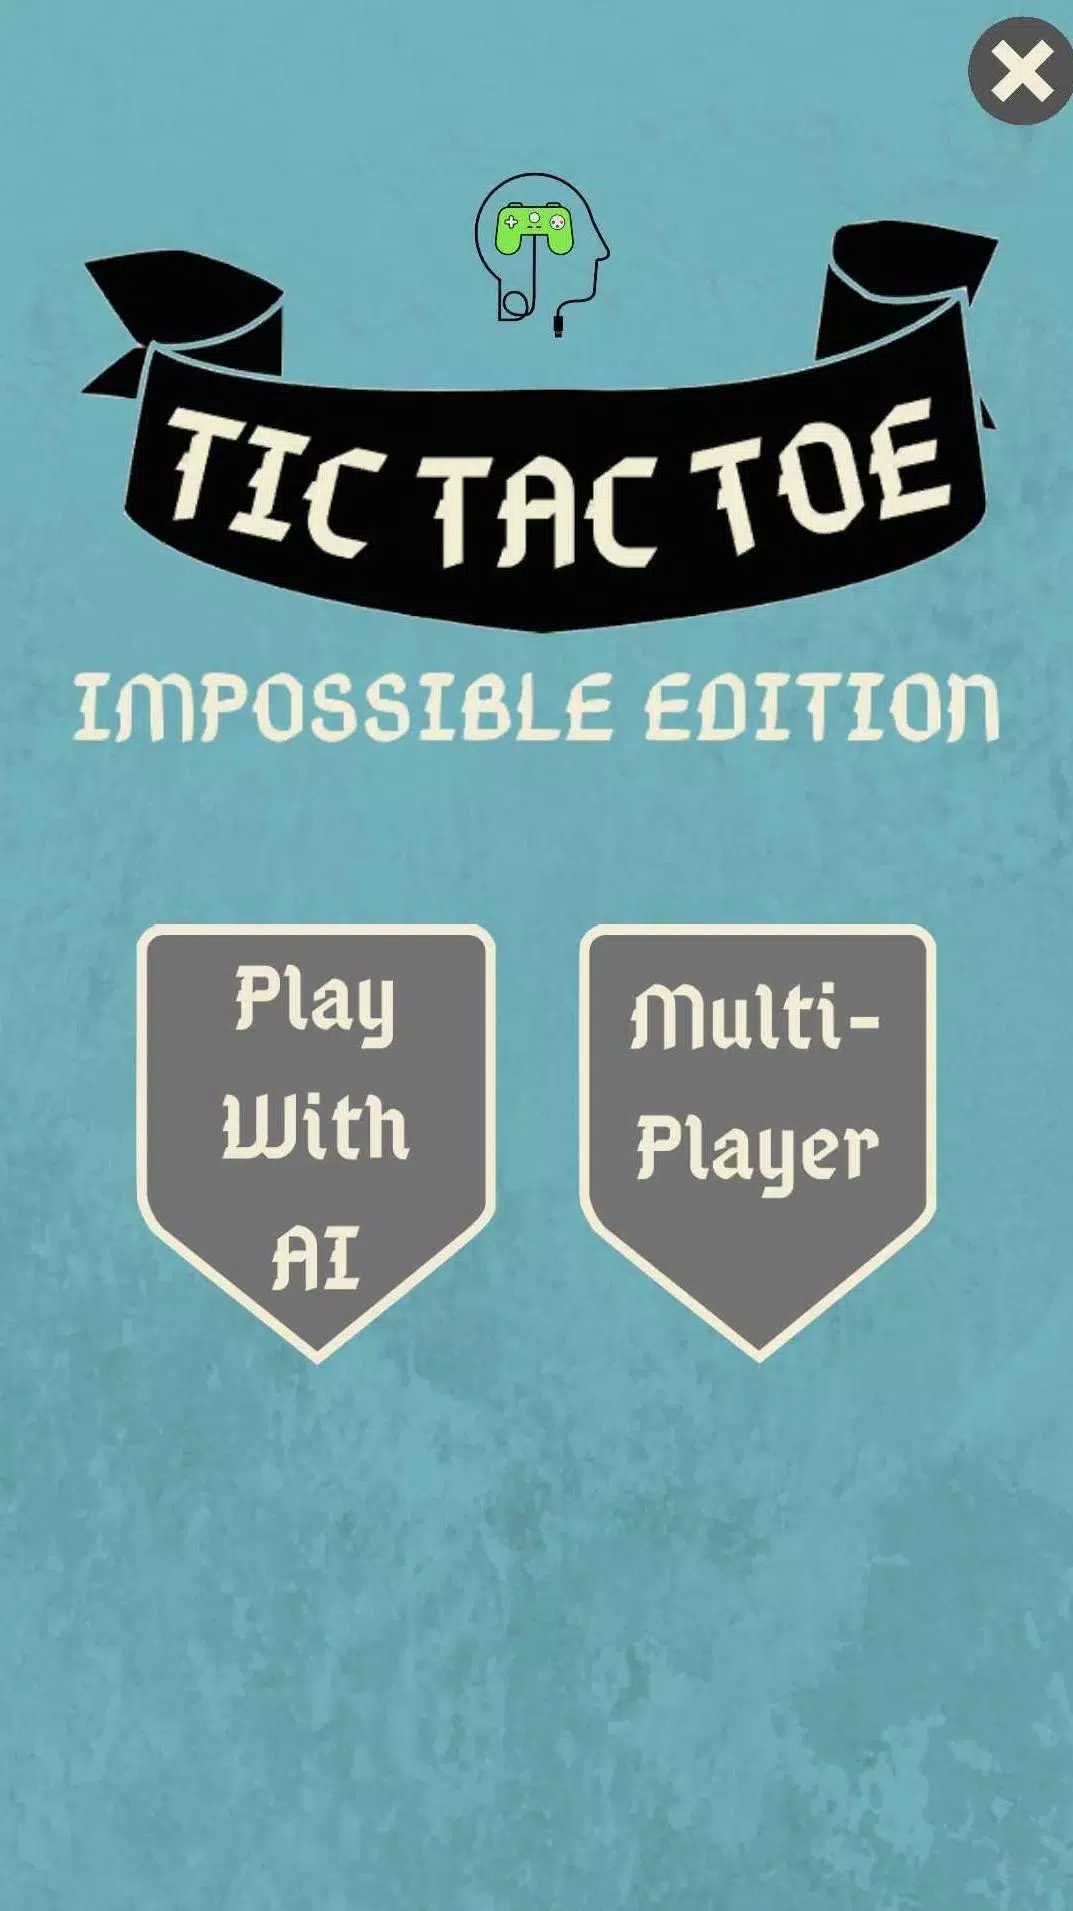 I beat the google impossible ai : r/TicTacToe